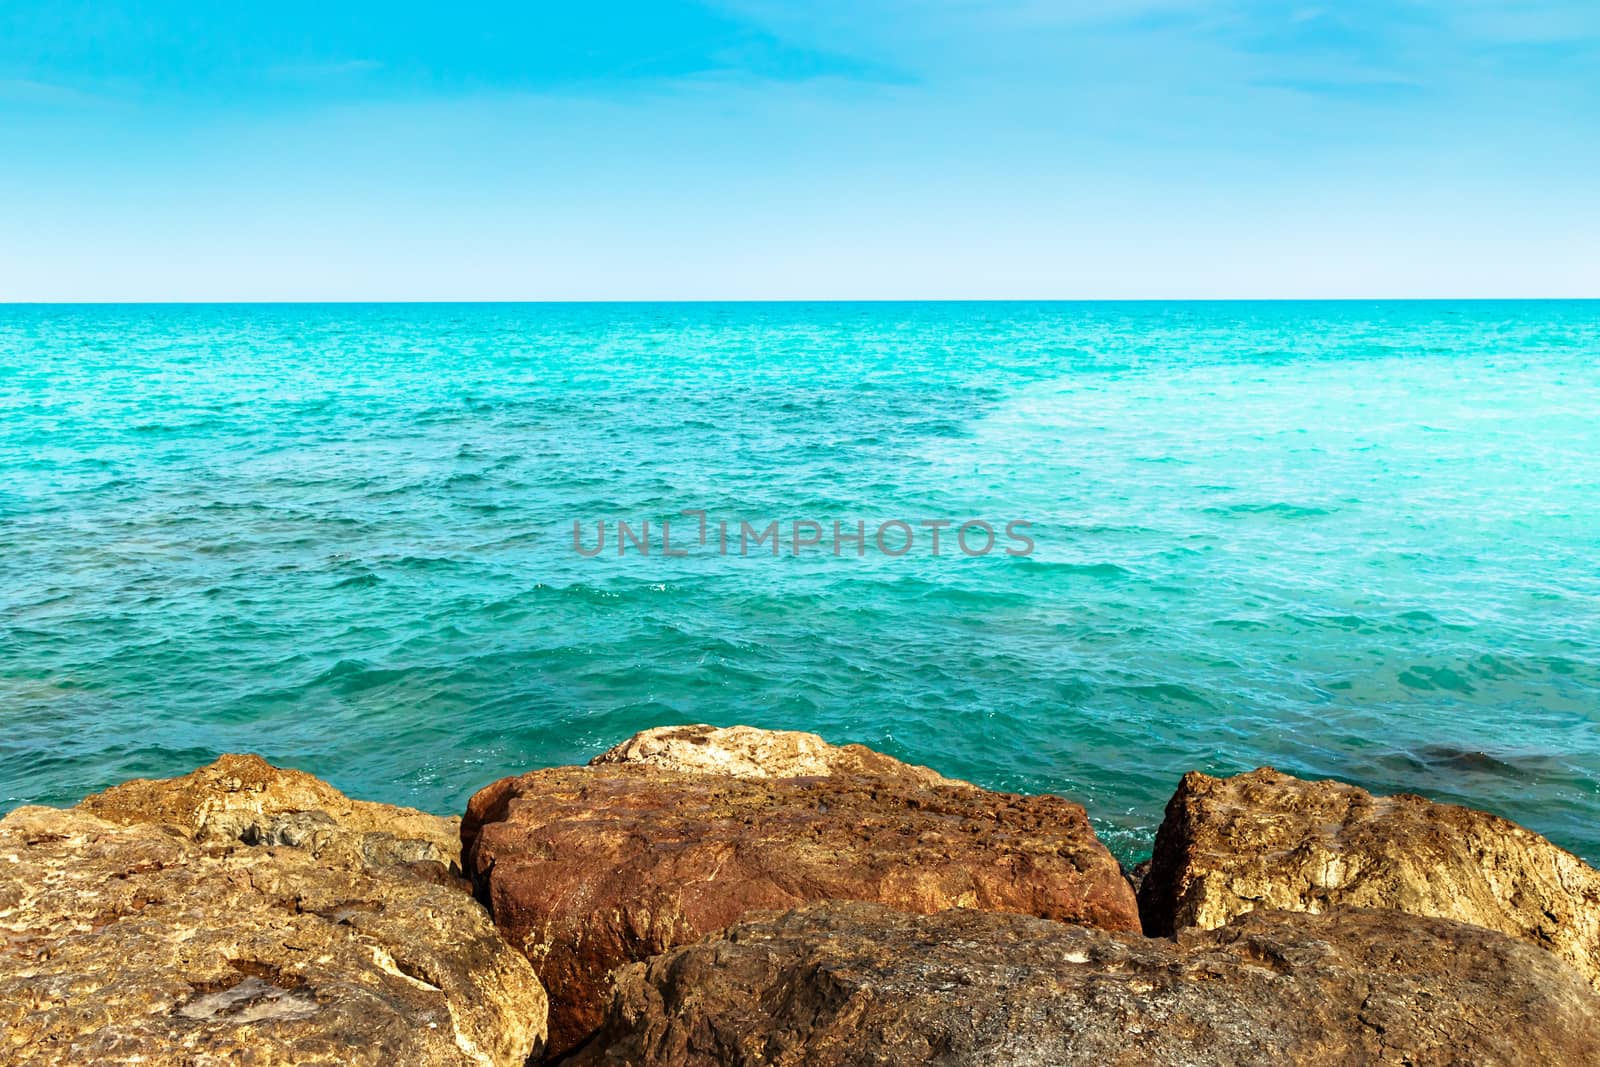 Stones of the sea breakwater. Horizontal image.